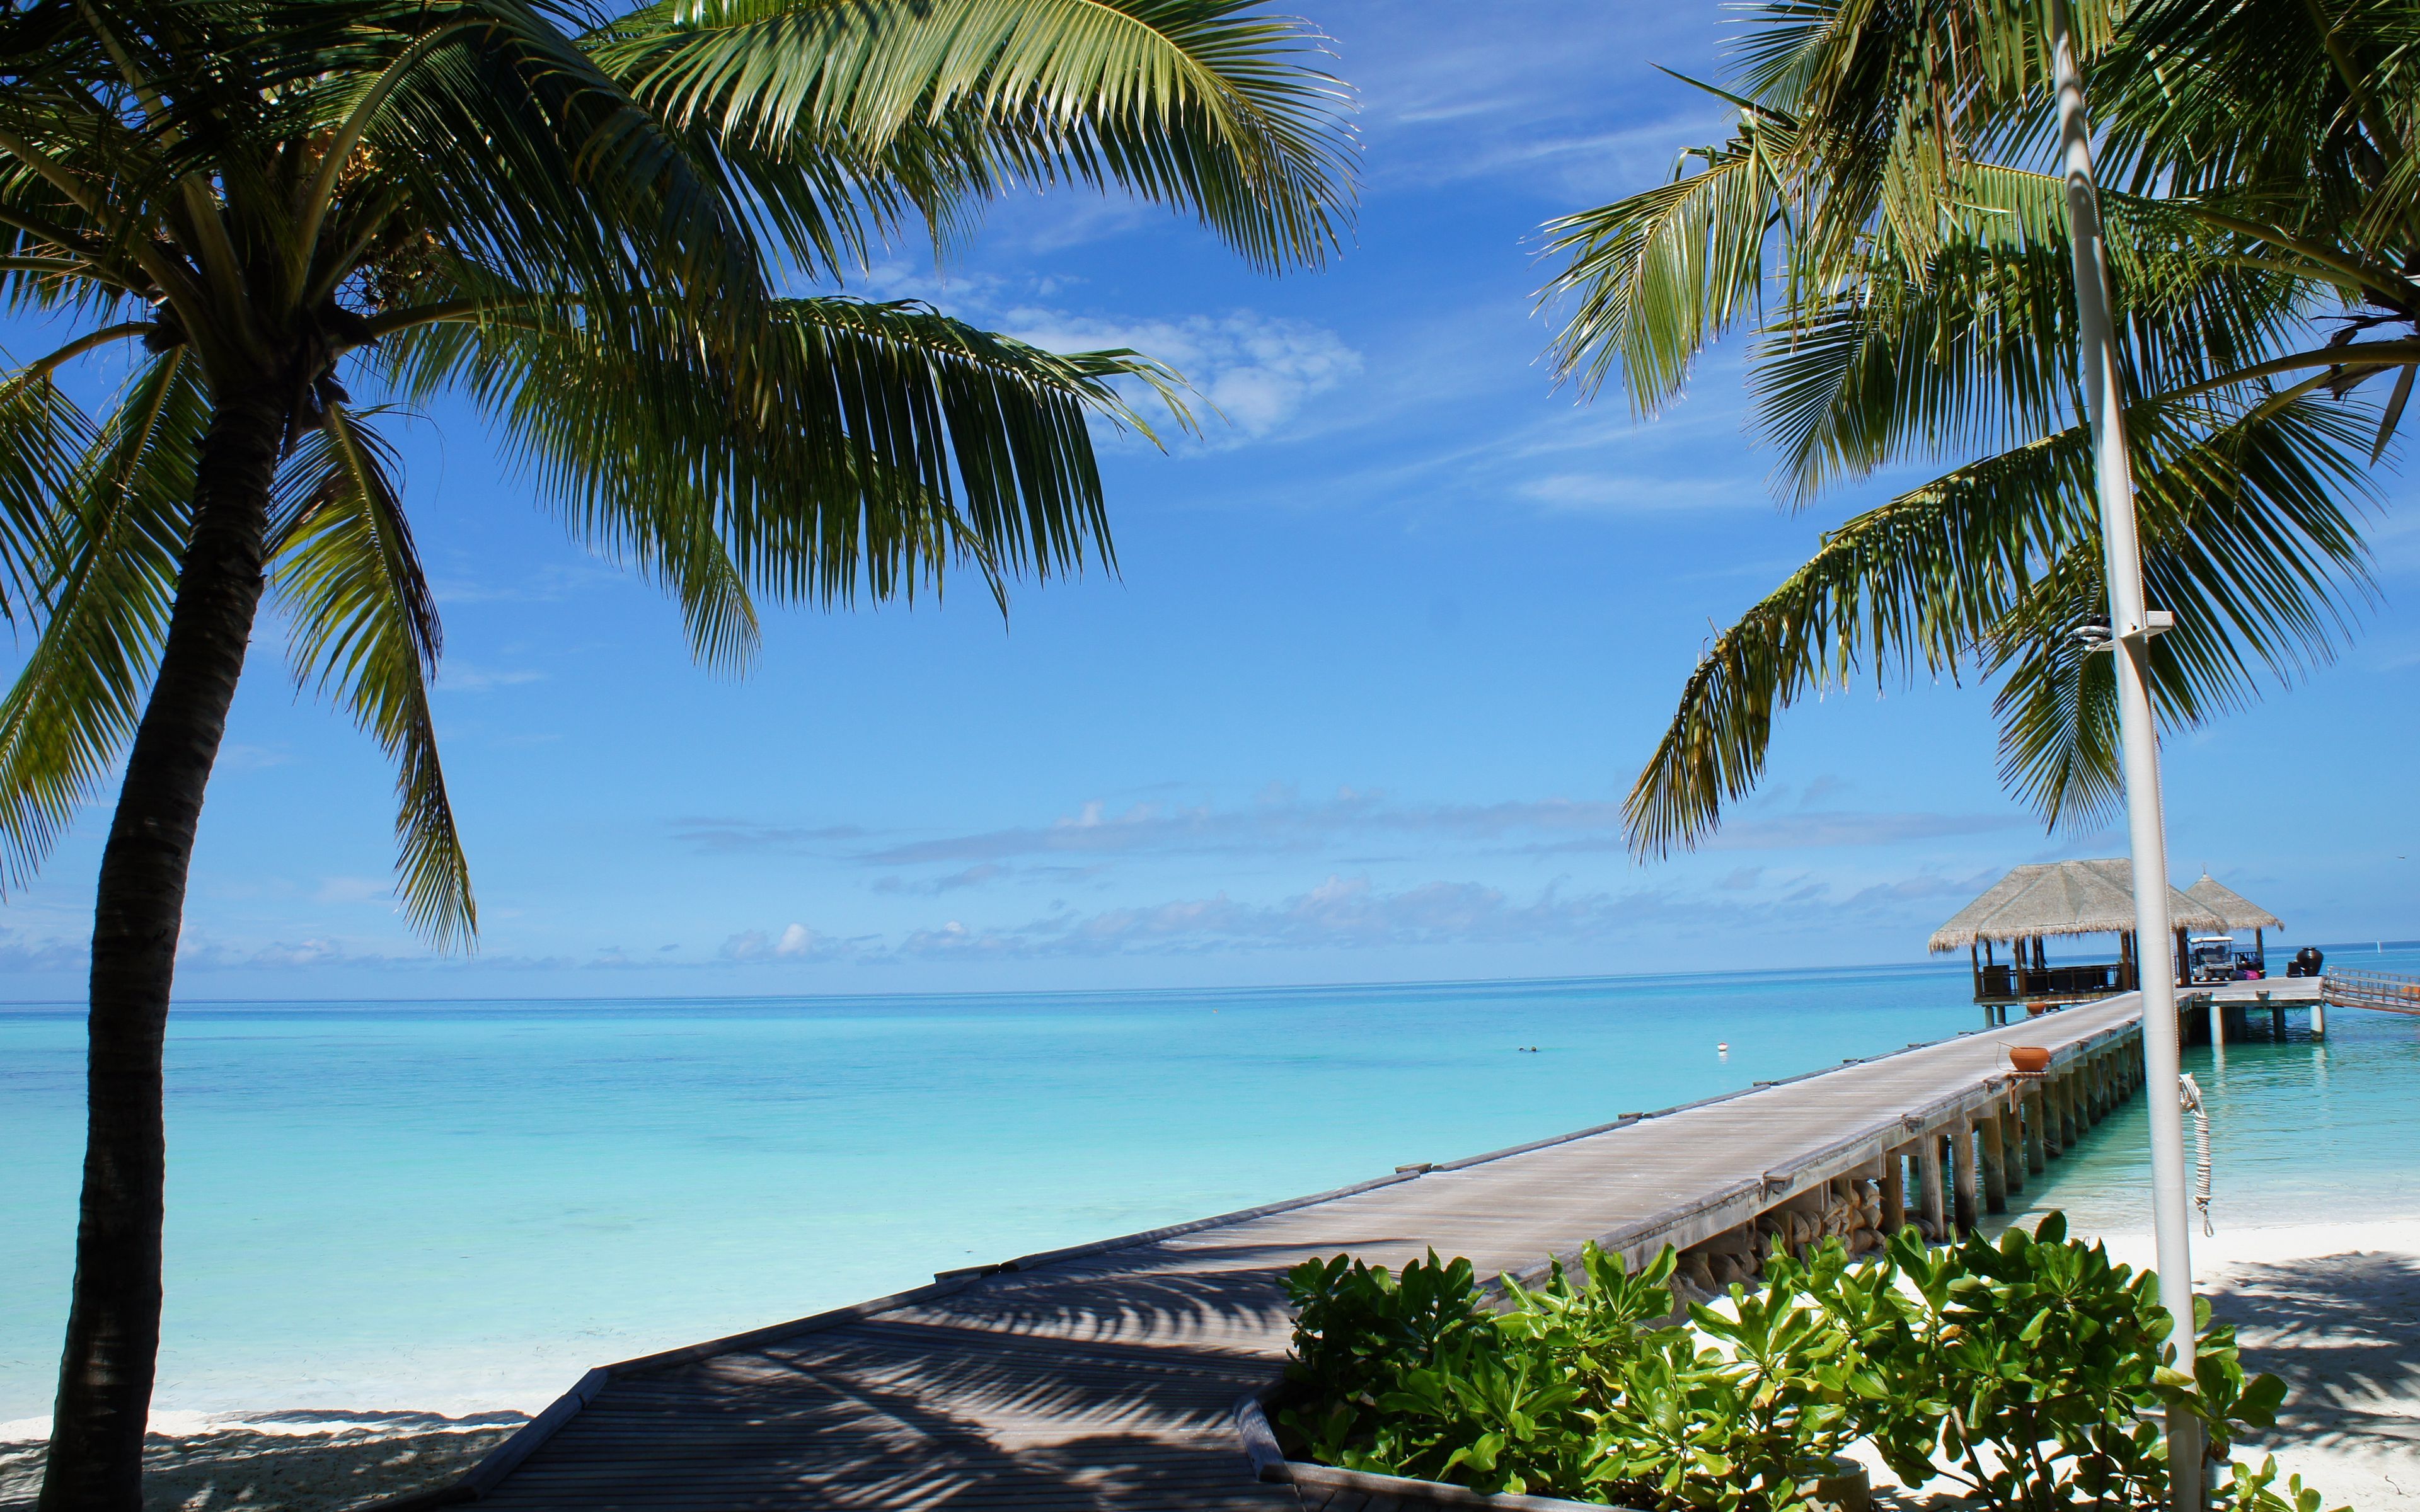 Download wallpaper 3840x2400 maldives, tropical, beach, beautiful 4k ultra HD 16:10 HD background